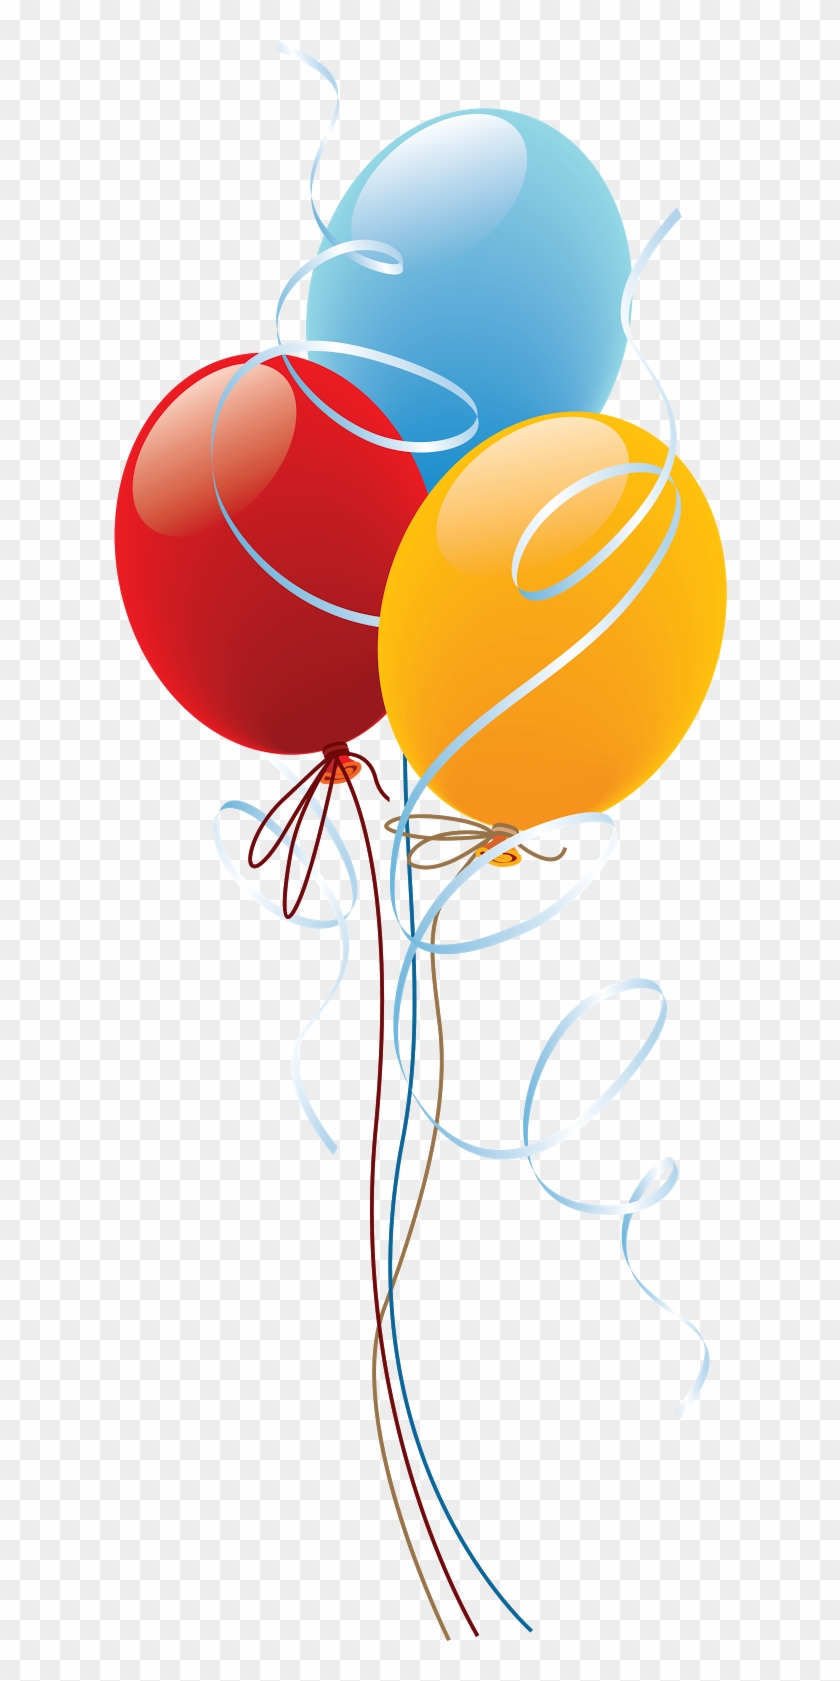 Birthday Cake Balloon Party Clip Art - Birthday Cake Balloon Party Clip Art #245948